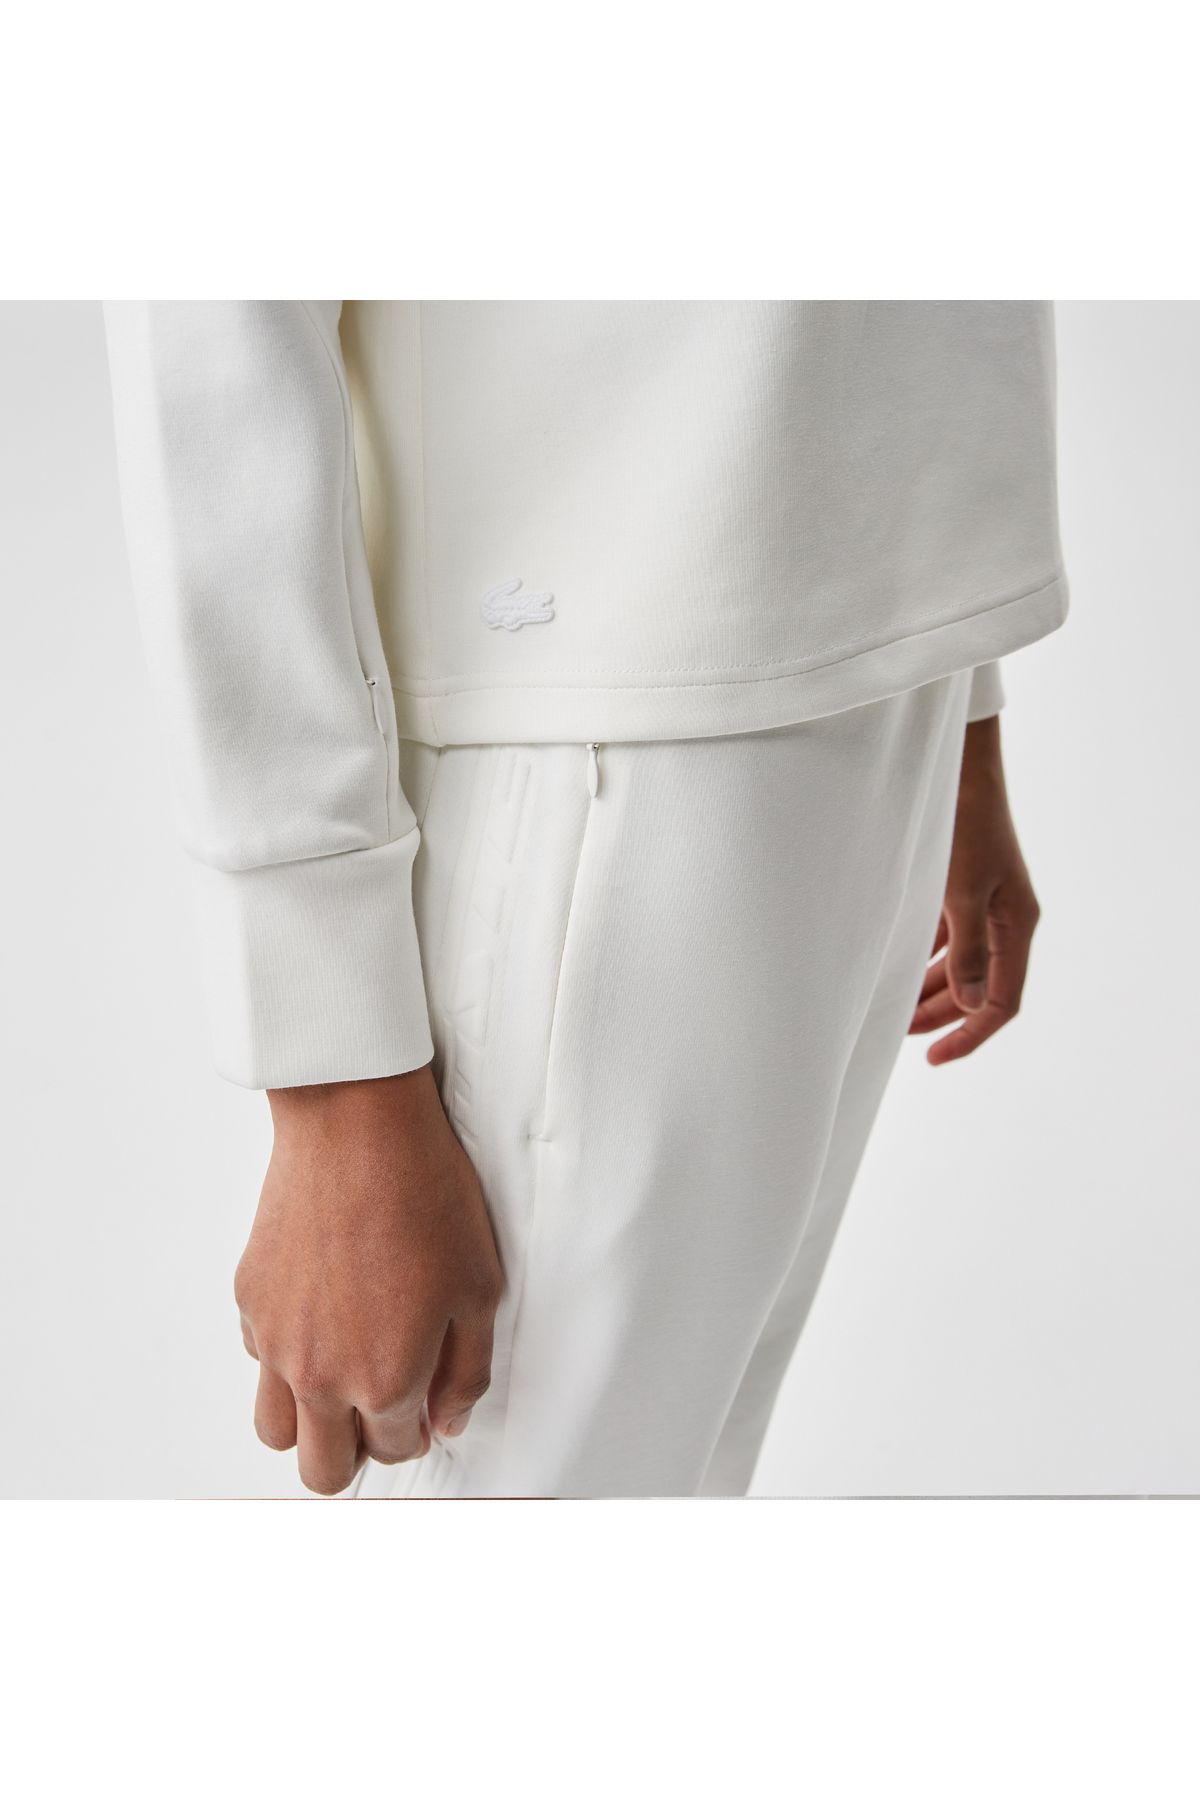 Lacoste پیراهن سفید لباس زنانه شل